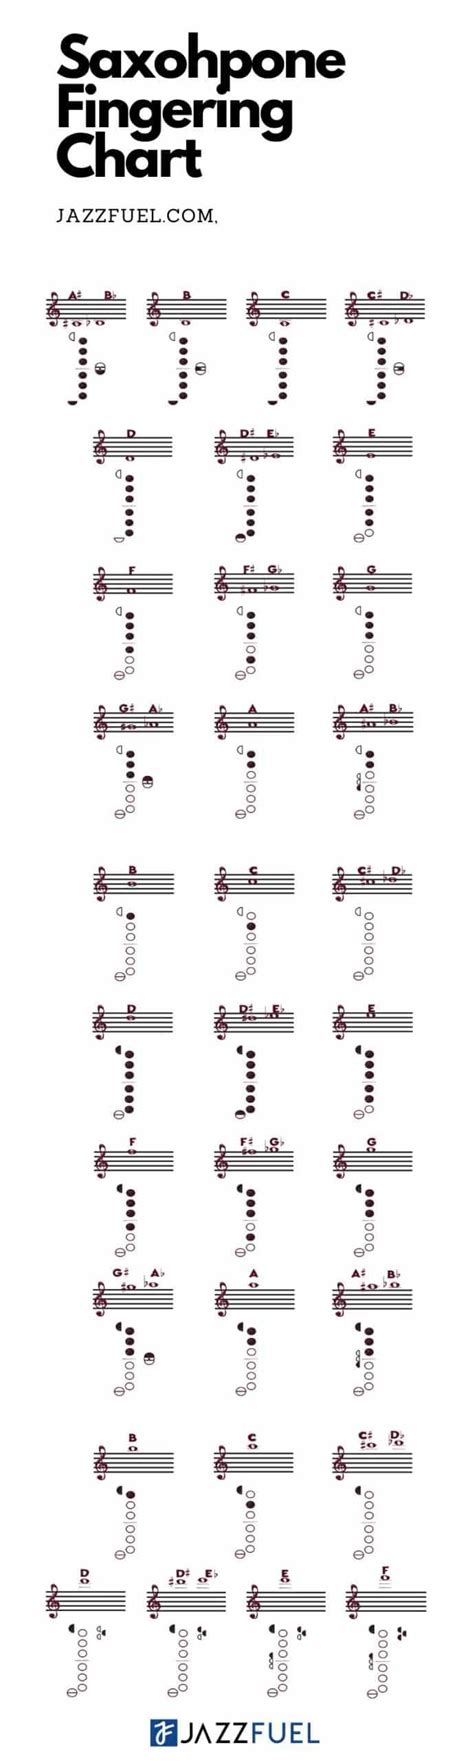 Fingering Chart For Saxophone